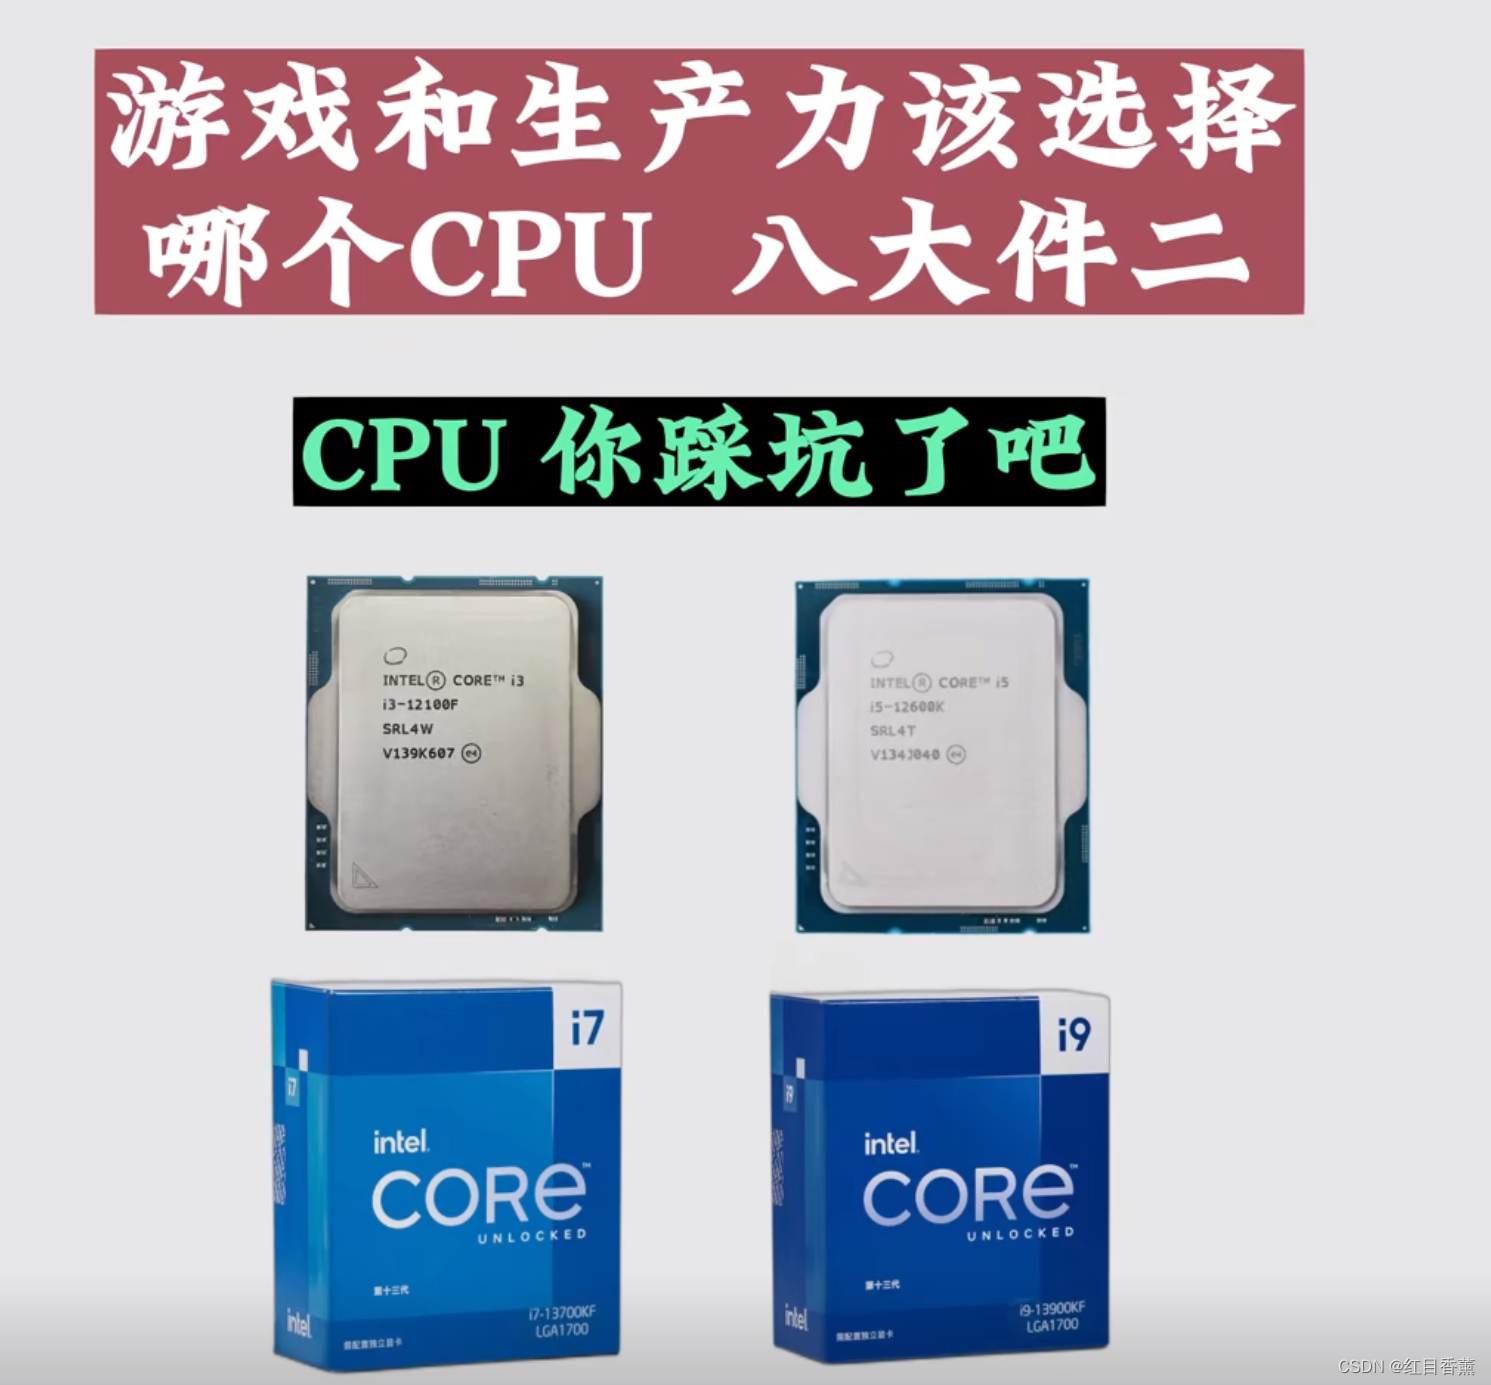 CPU型号分析避坑指南——2、游戏电脑与办公电脑CPU该如何选择